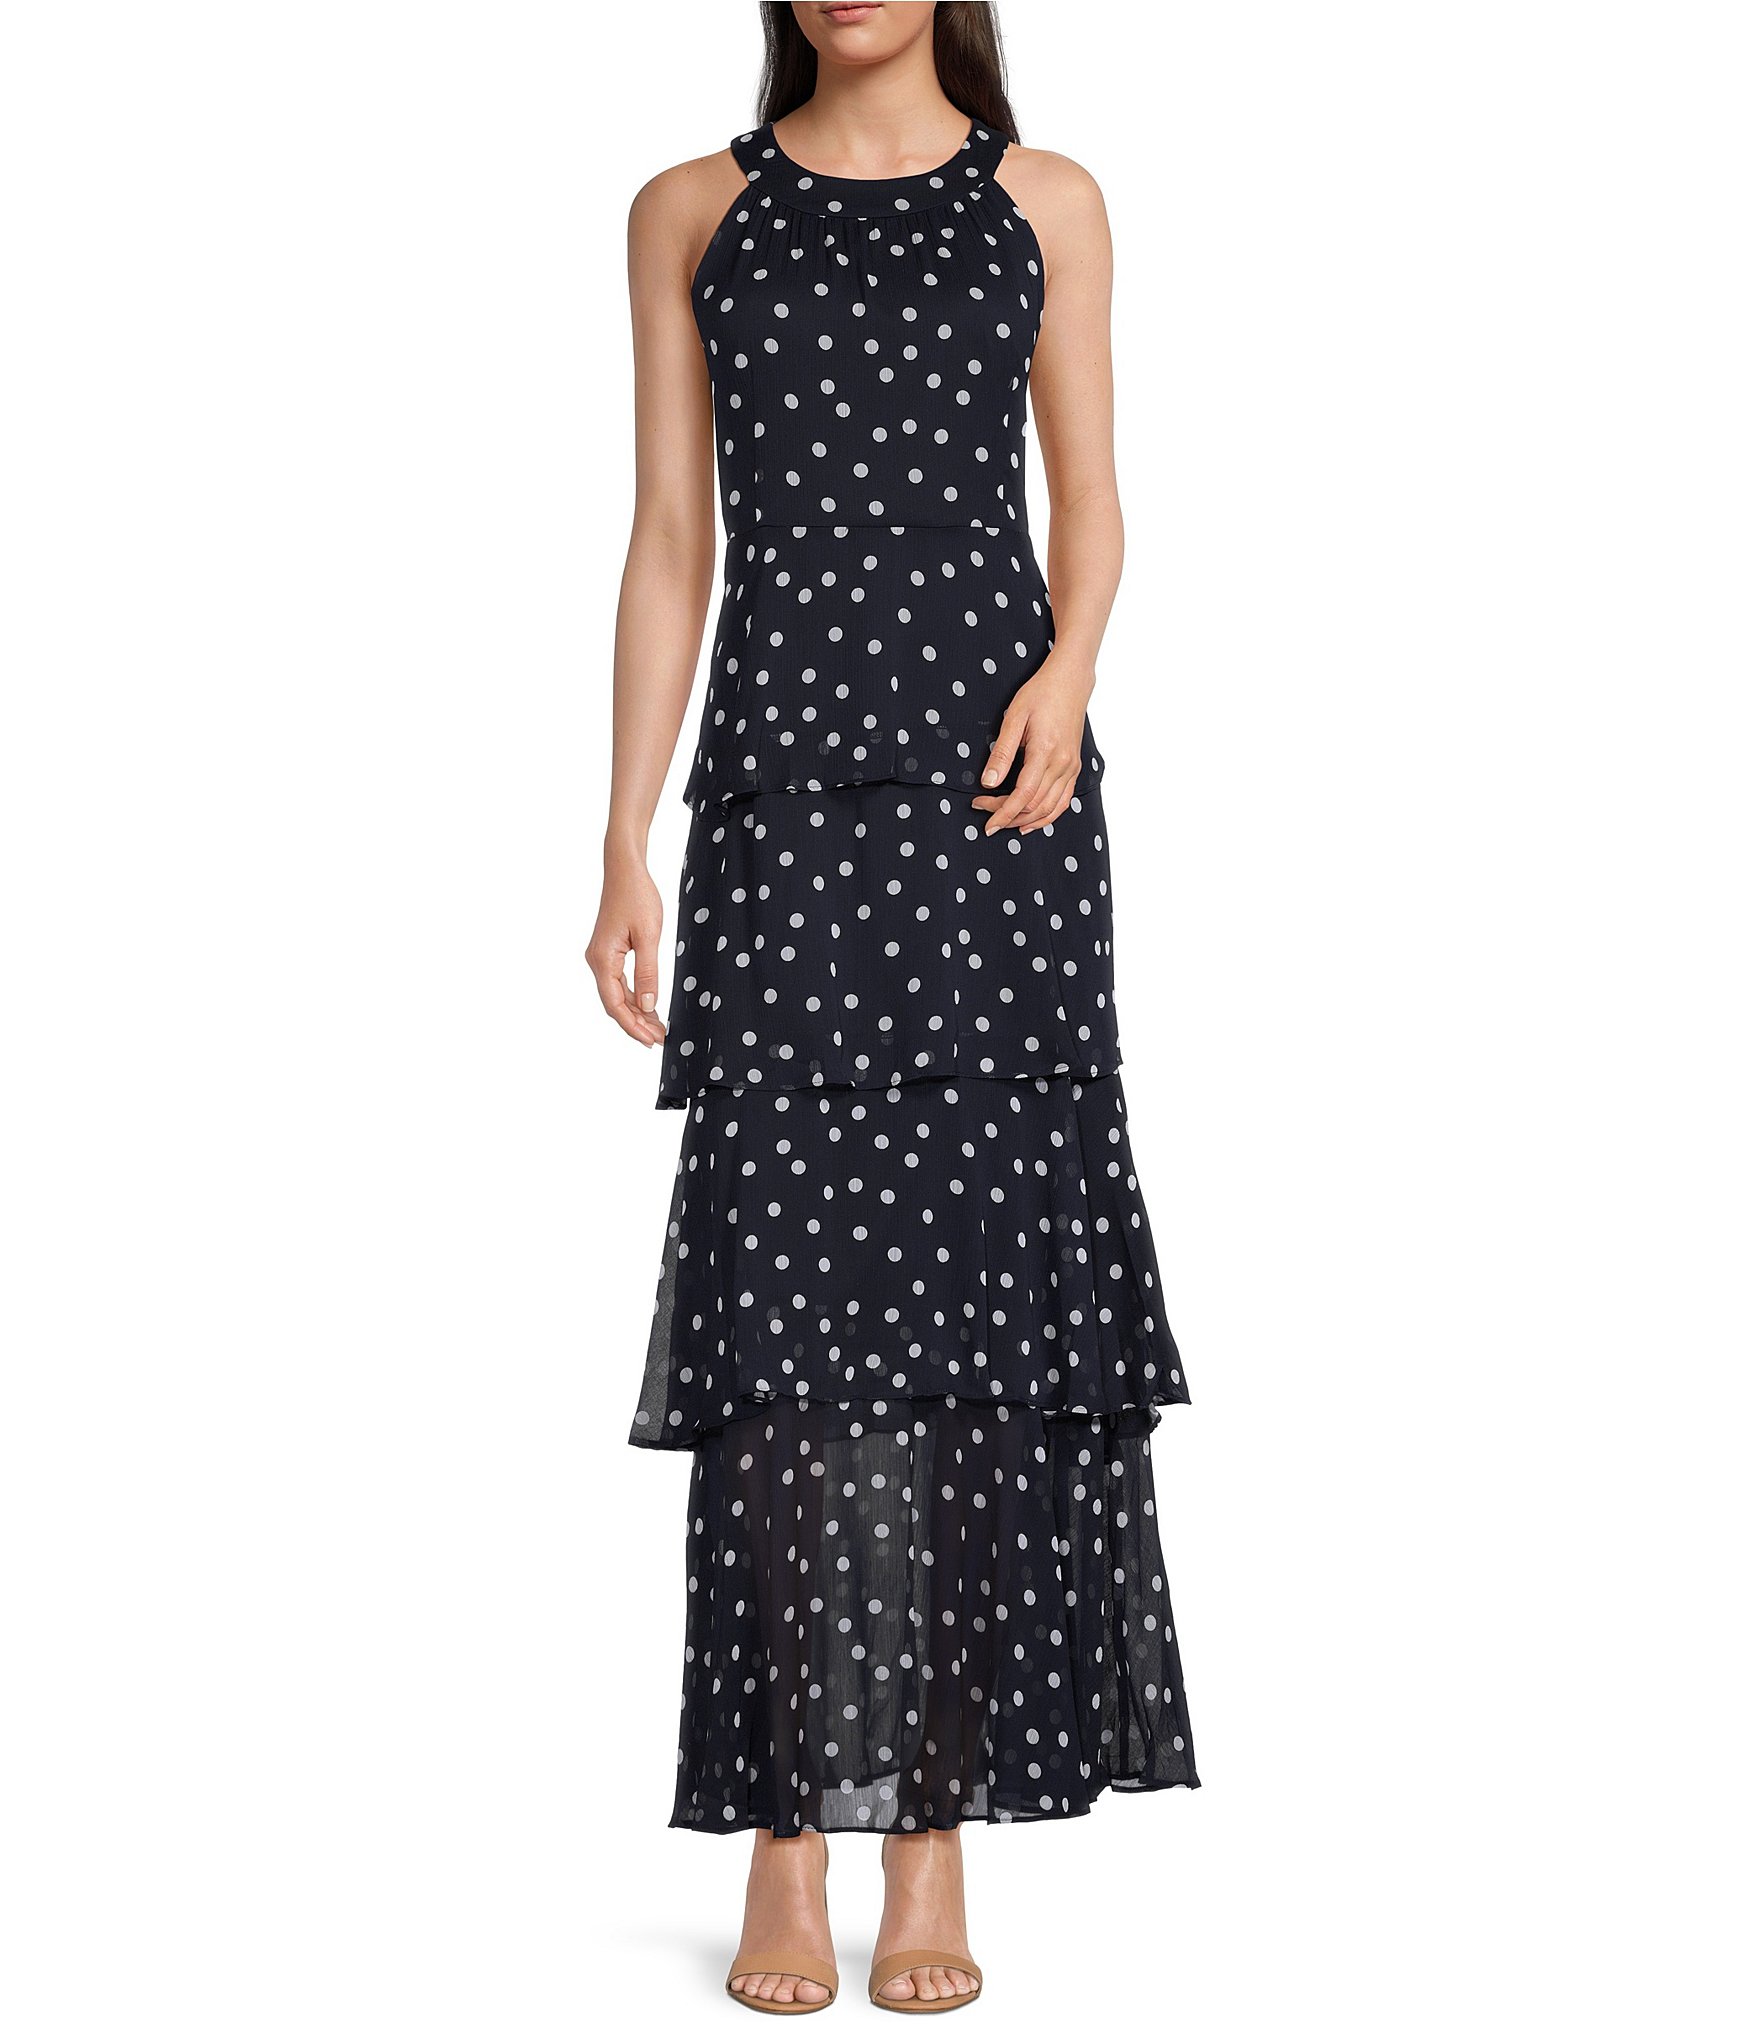 tommy hilfiger dress: Formal Dresses & Evening Gowns | Dillard's